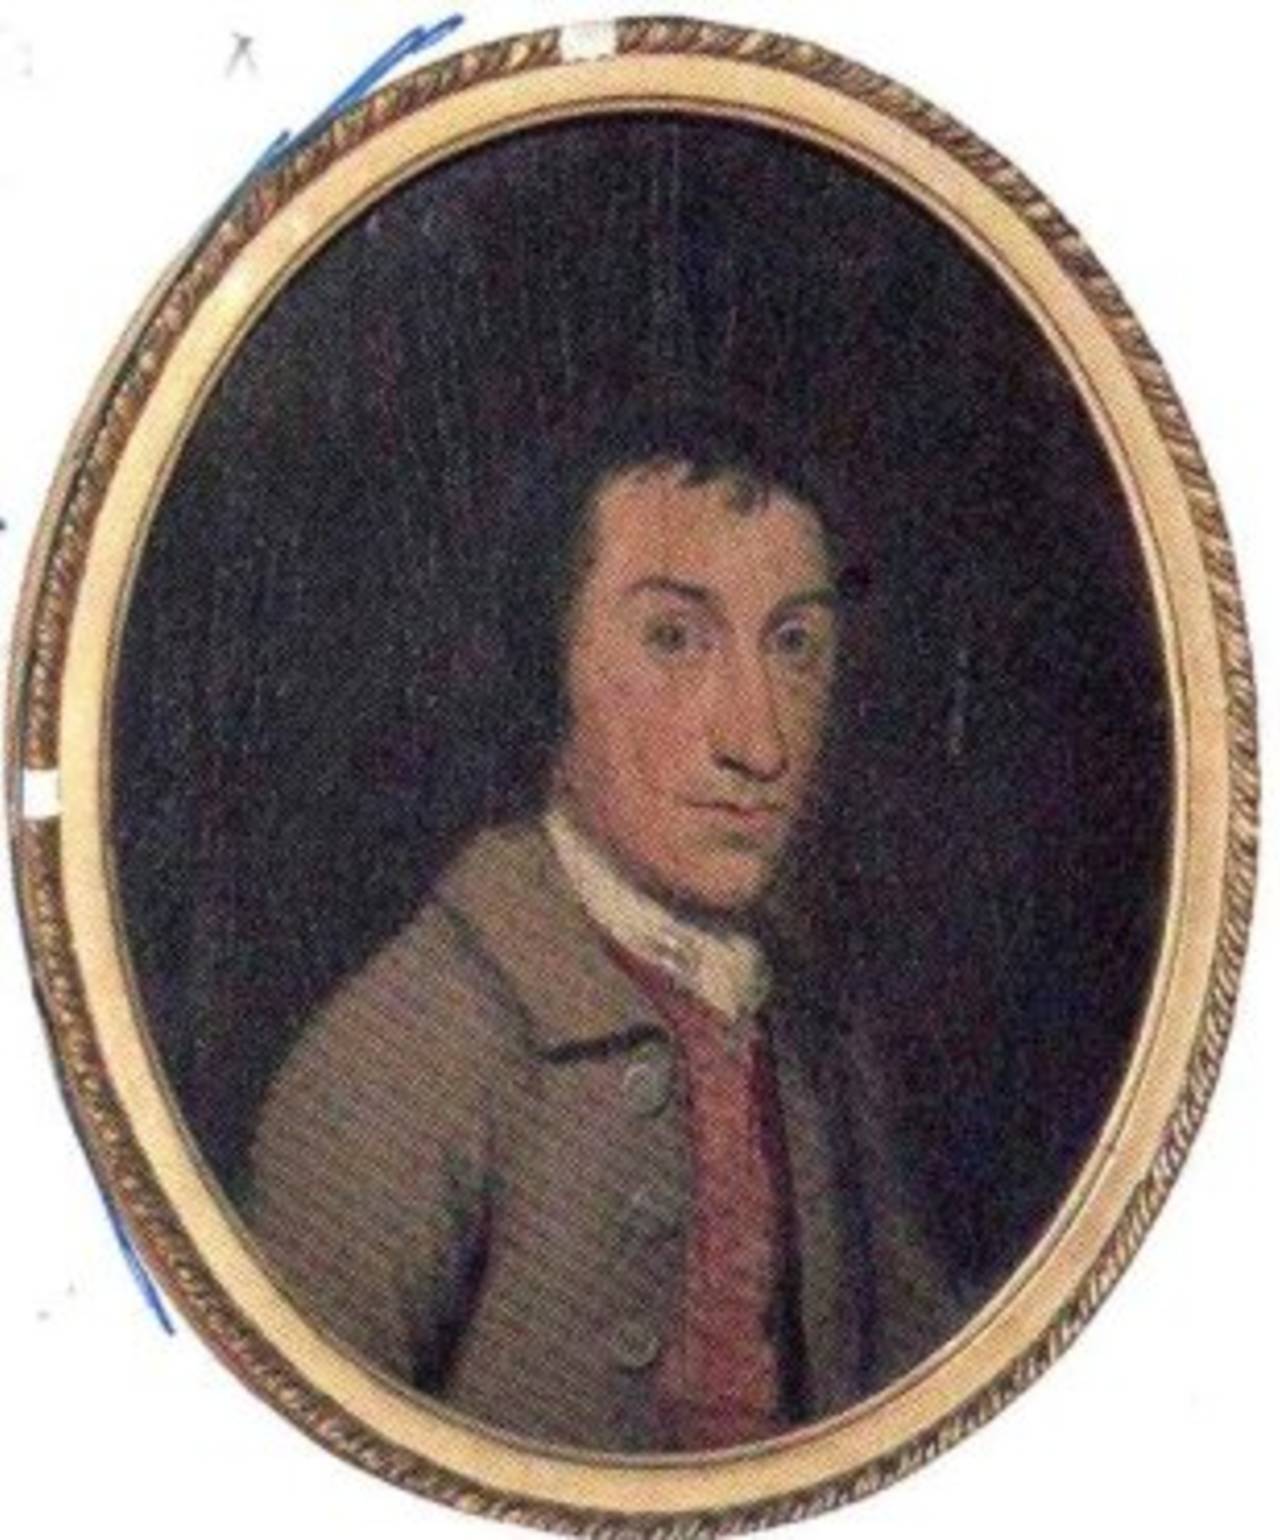 Edward Lumpy Stevens portrait 